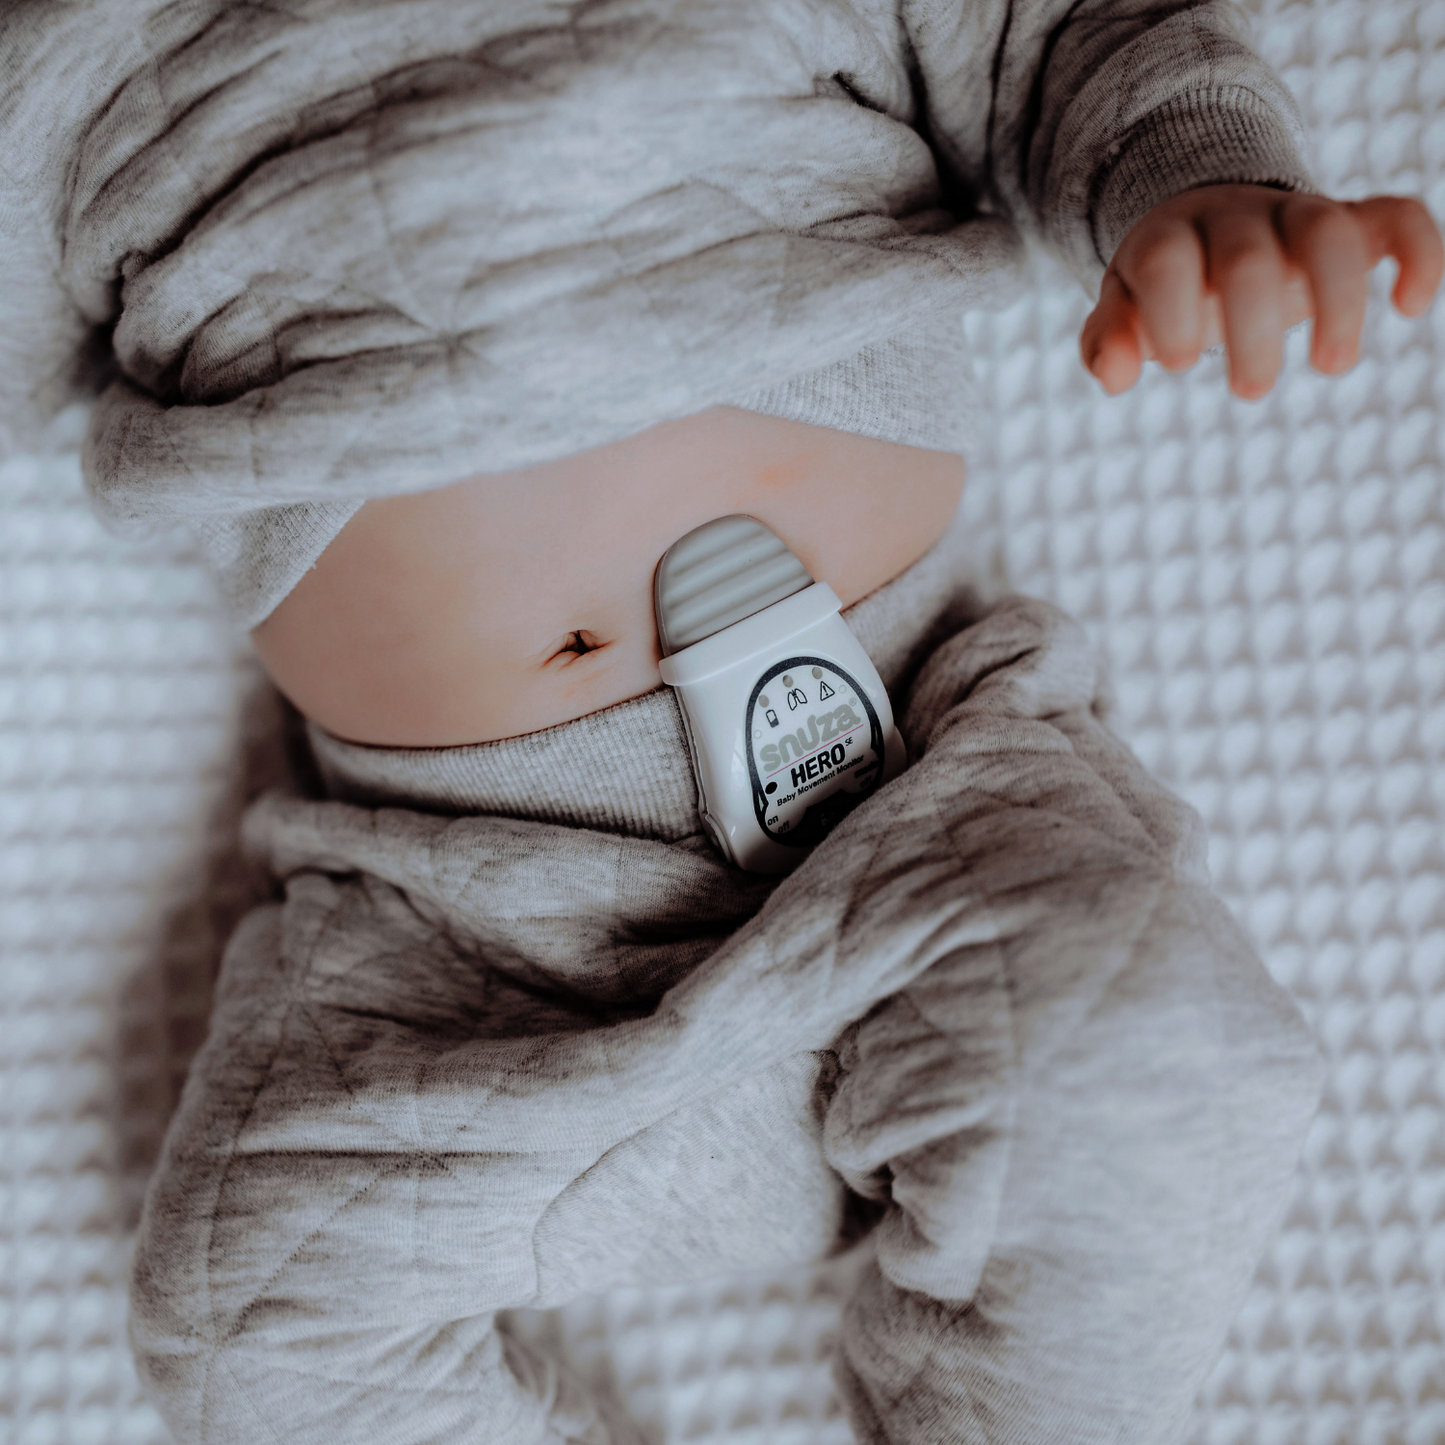 SNUZA Hero - Portable, Wearable Baby Abdominal Movement Monitor with Vibration and Alarm.